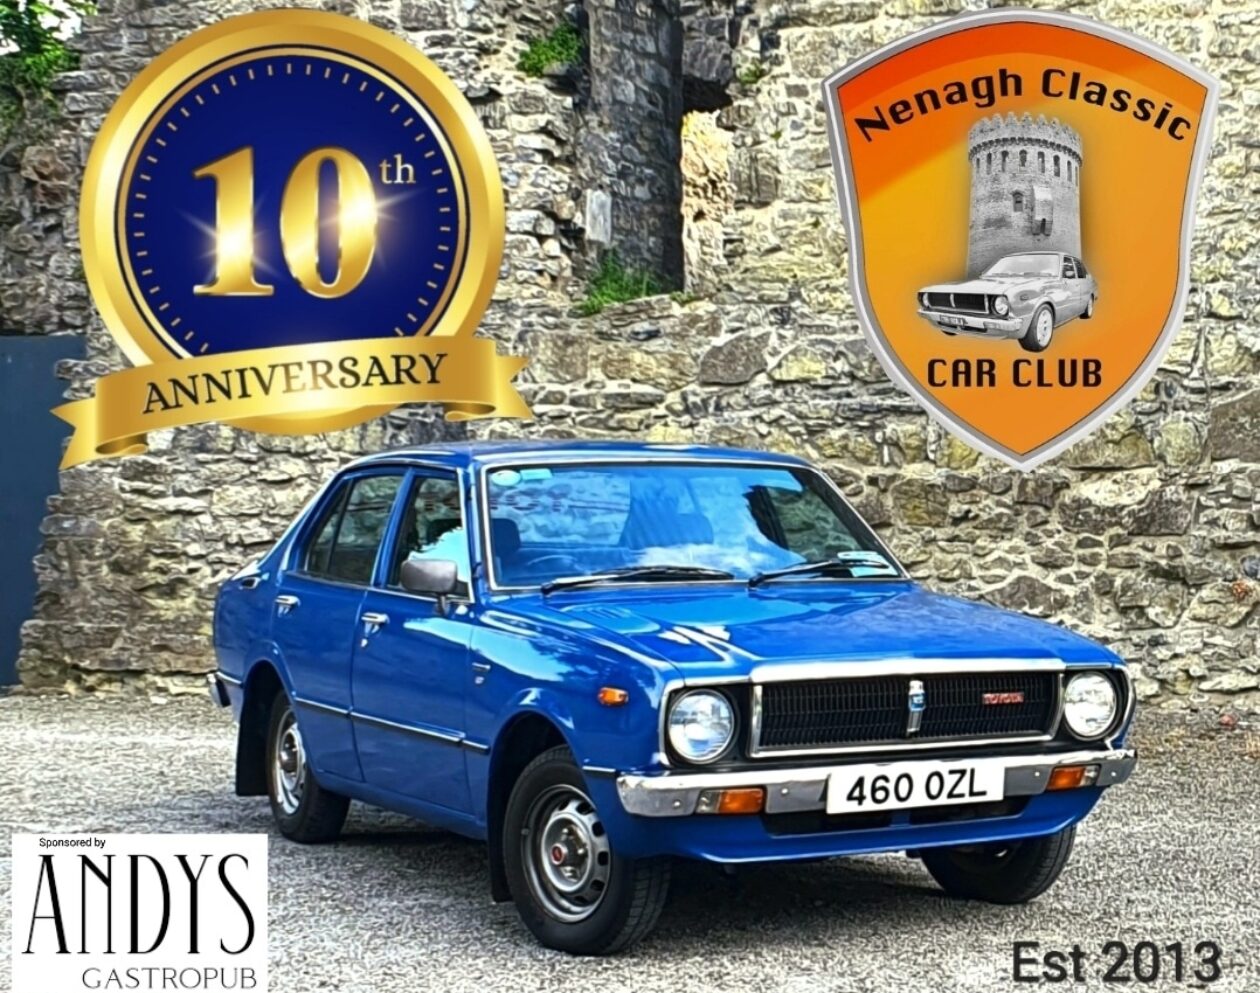 Nenagh Classic Car Club